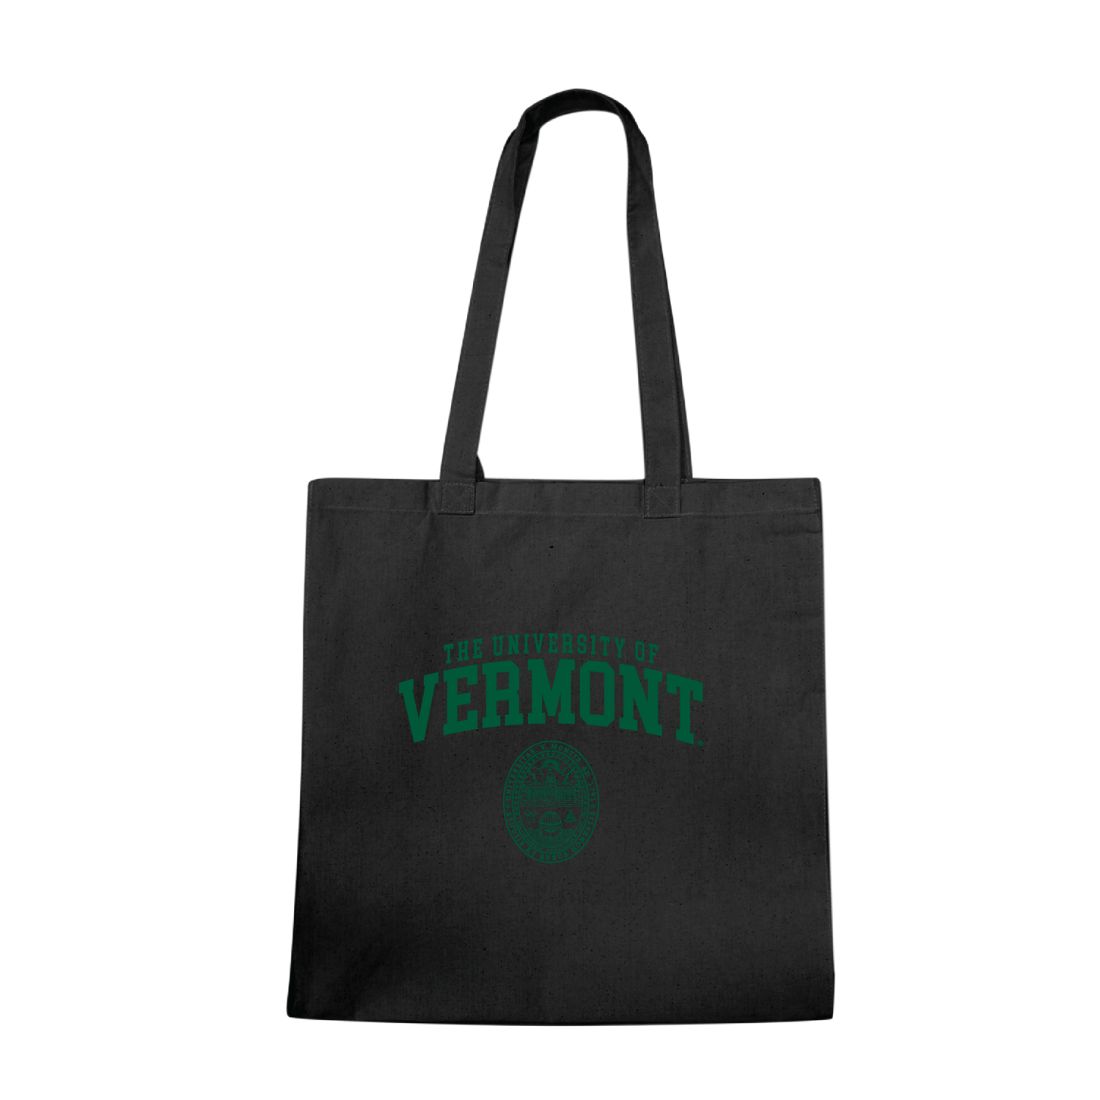 UVM University of Vermont Catamounts Institutional Seal Tote Bag